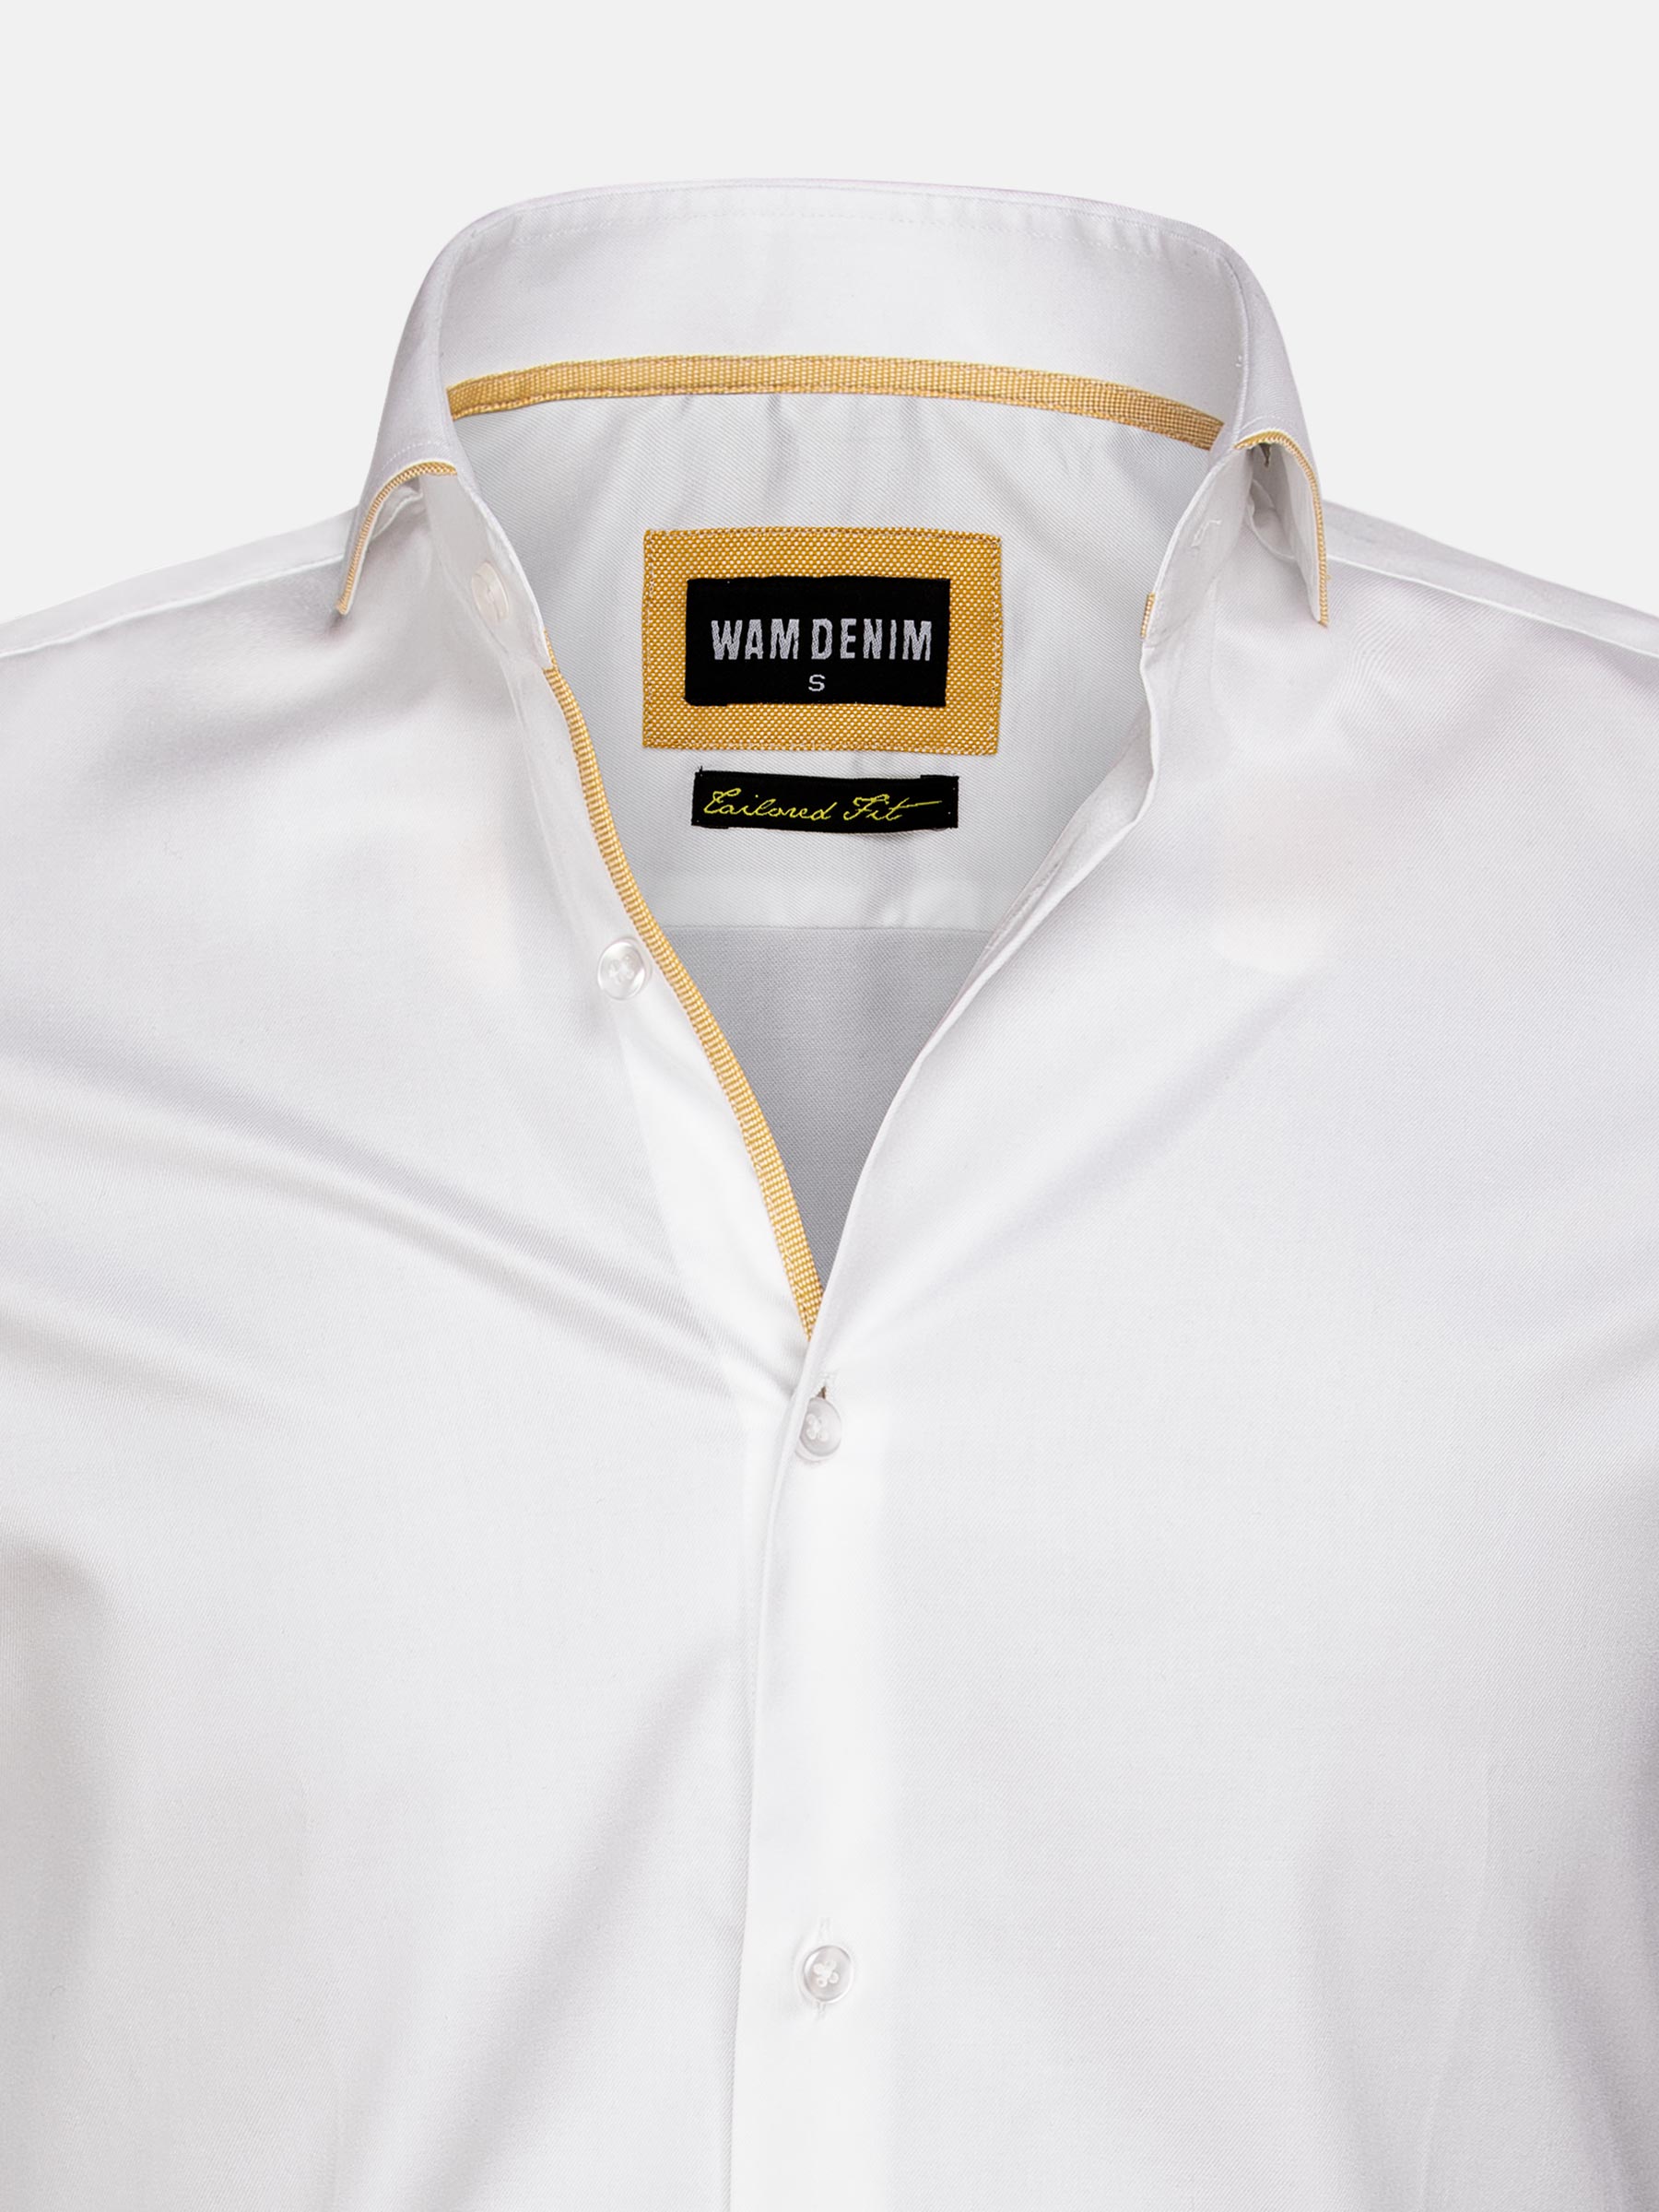 Shirt Long Sleeve 75554 Adria White Yellow